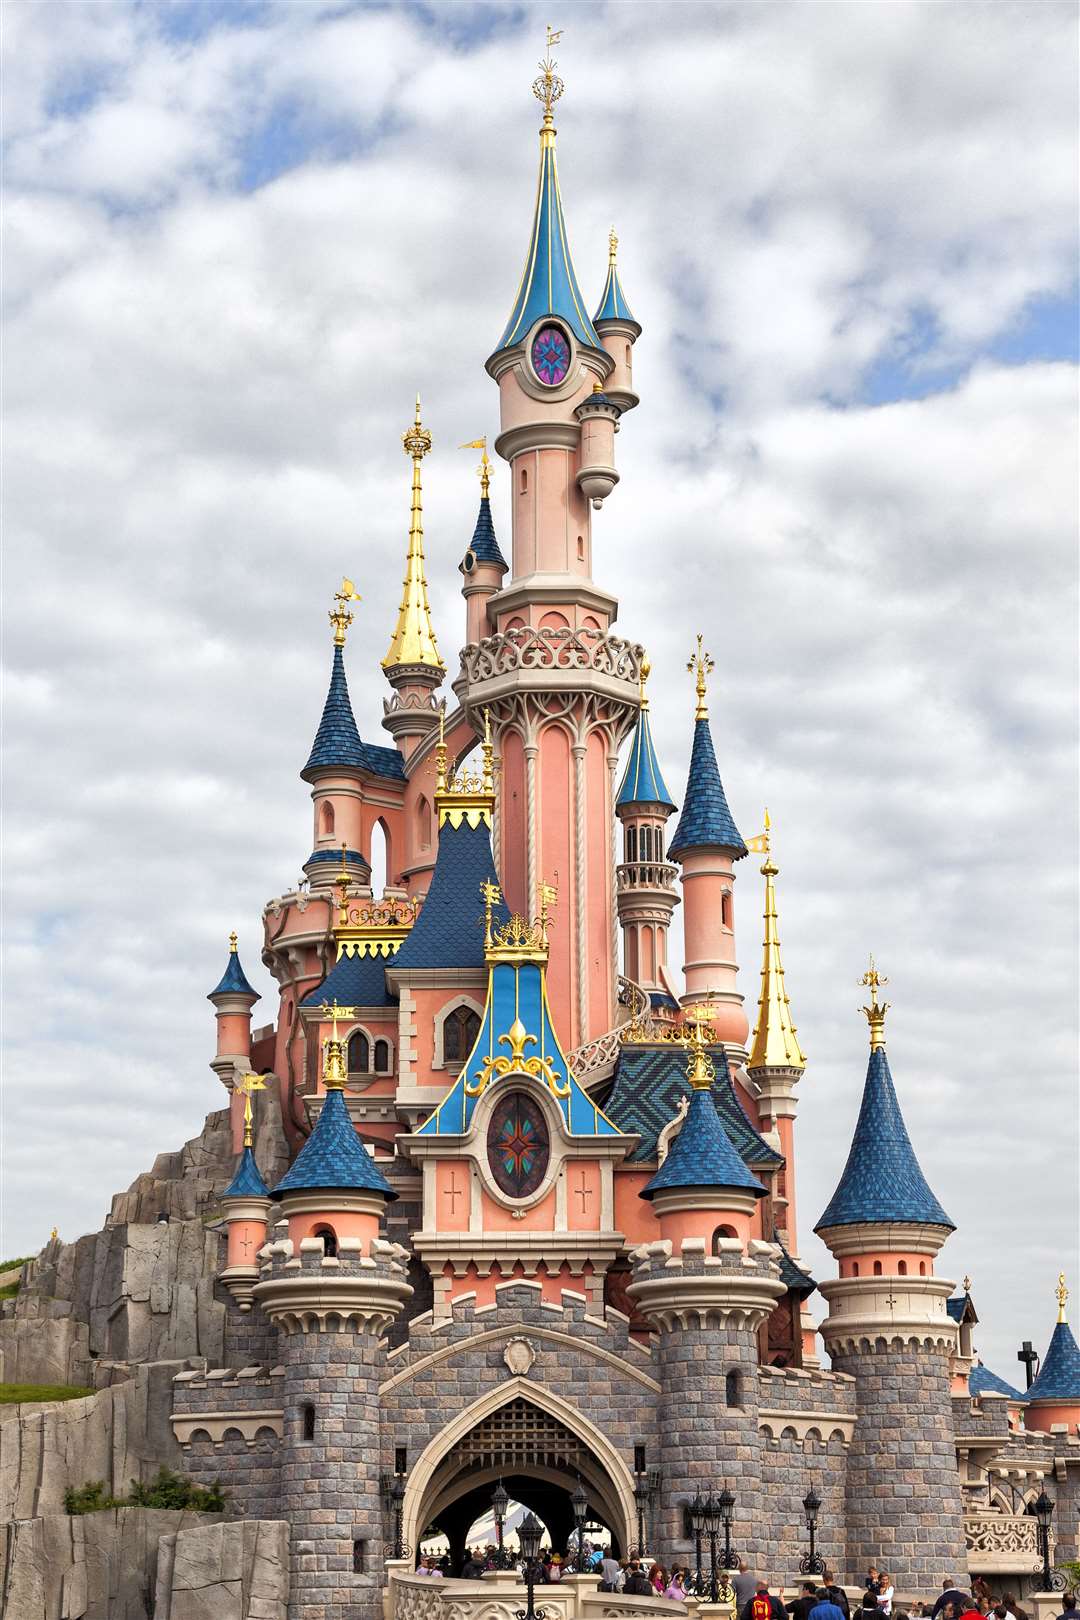 The dad and daughter visited Disneyland Paris